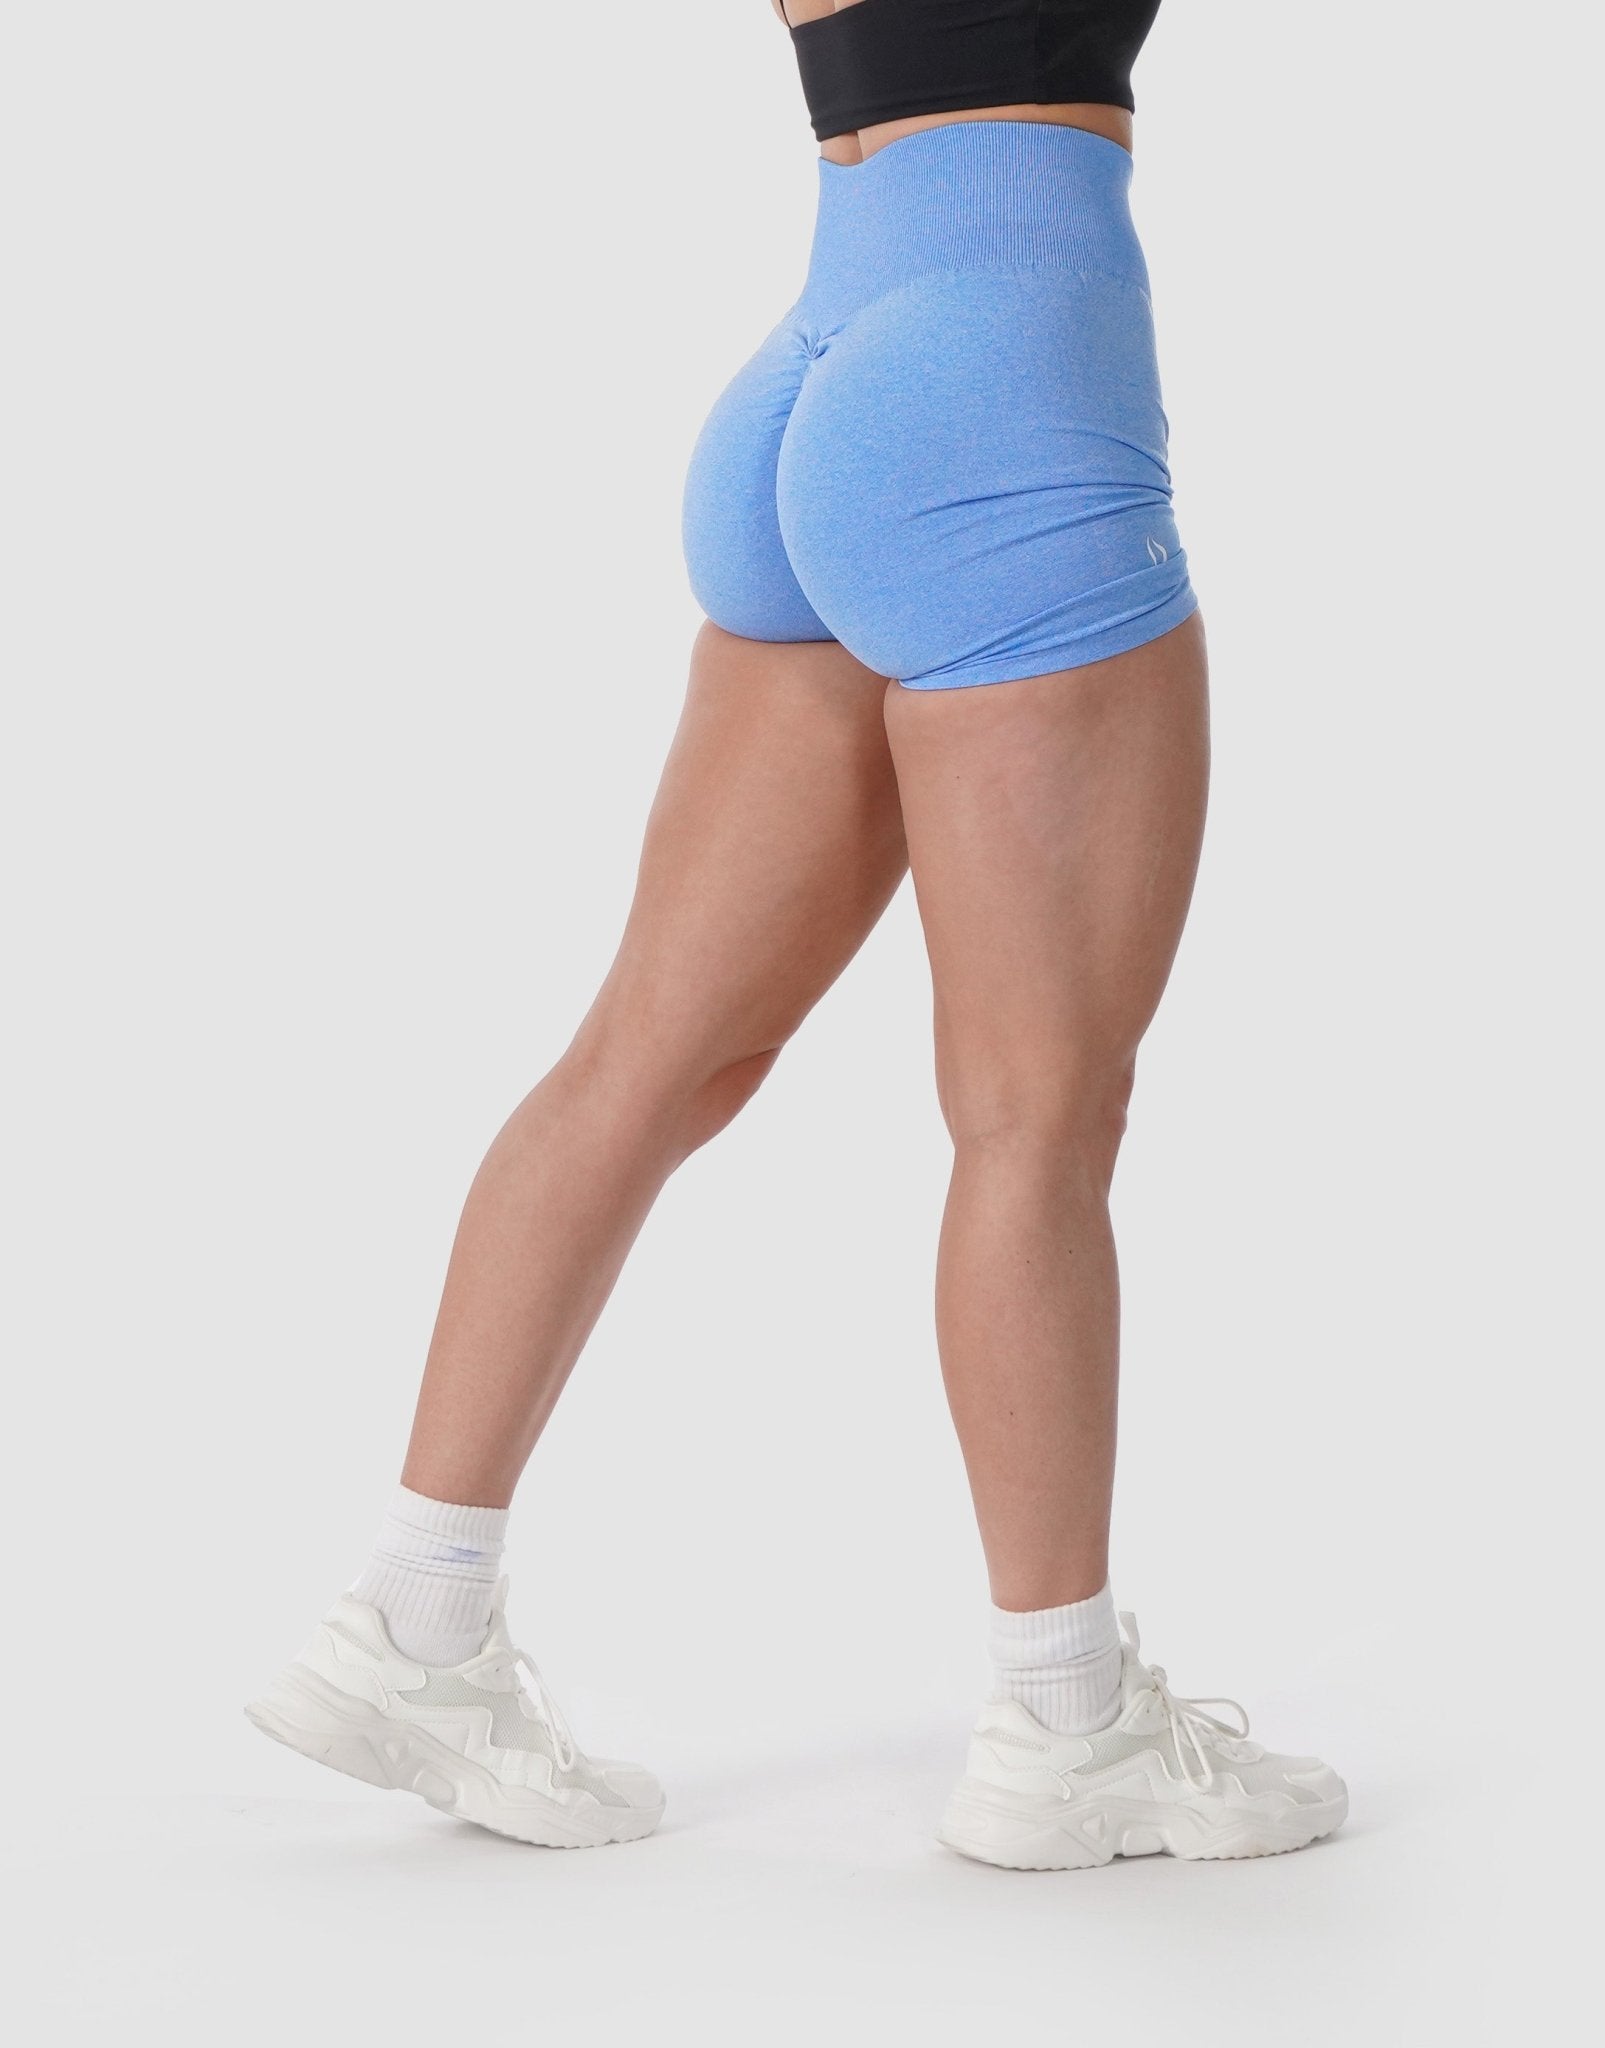 Scrunch Butt Leggings, Gym Clothing